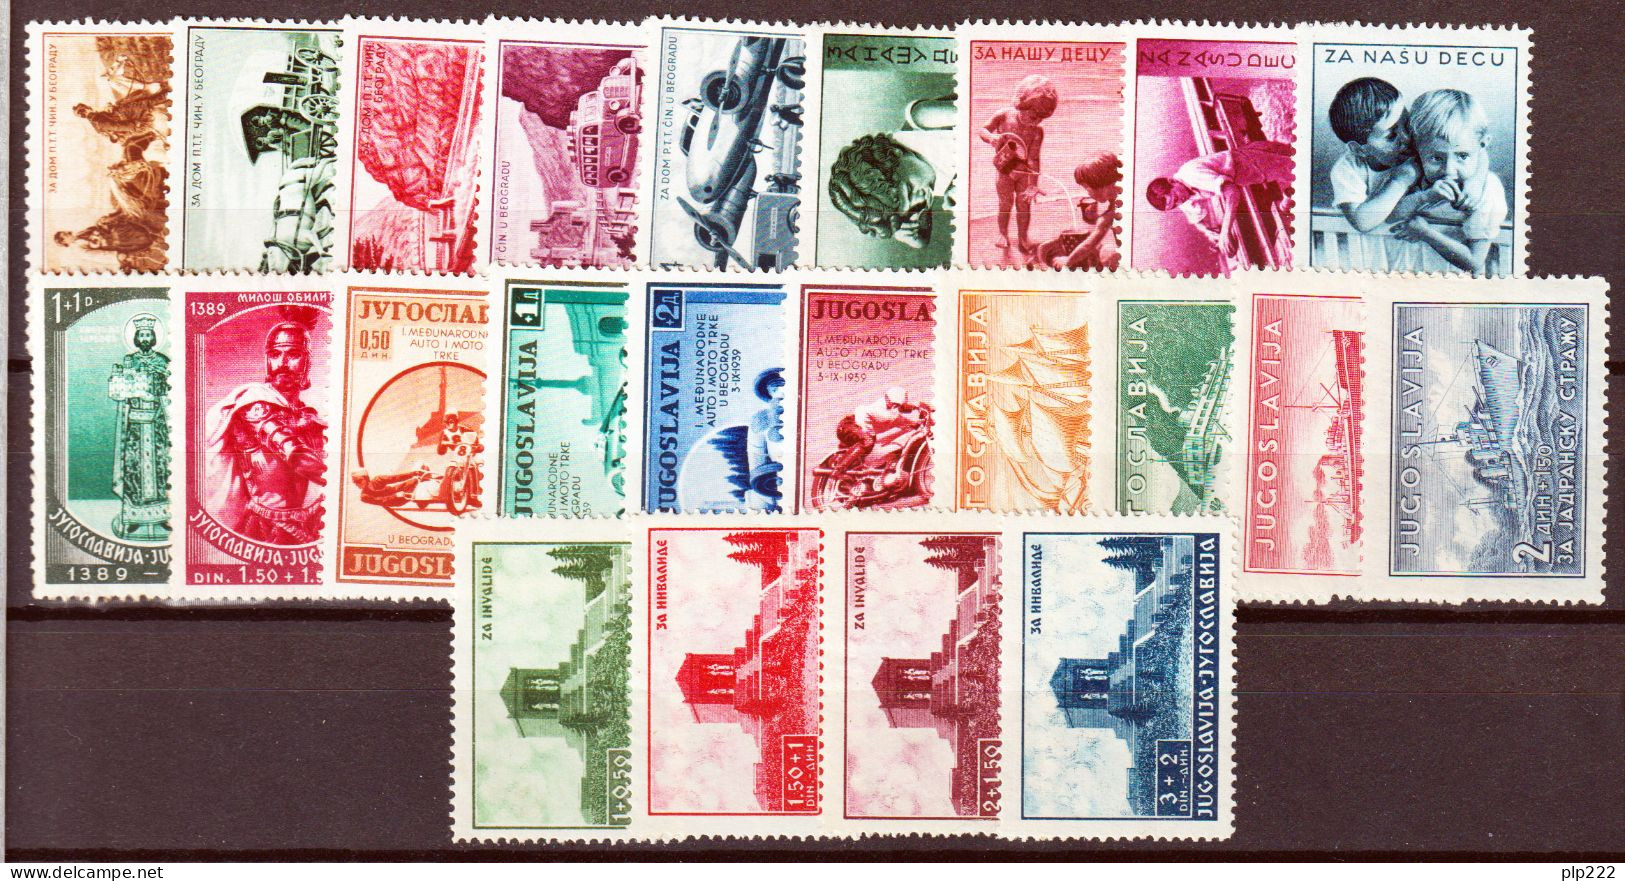 Jugoslavia 1939 Annata Completa Commemorativi / Complete Year Set Commemoratives **/MNH VF/F - Komplette Jahrgänge